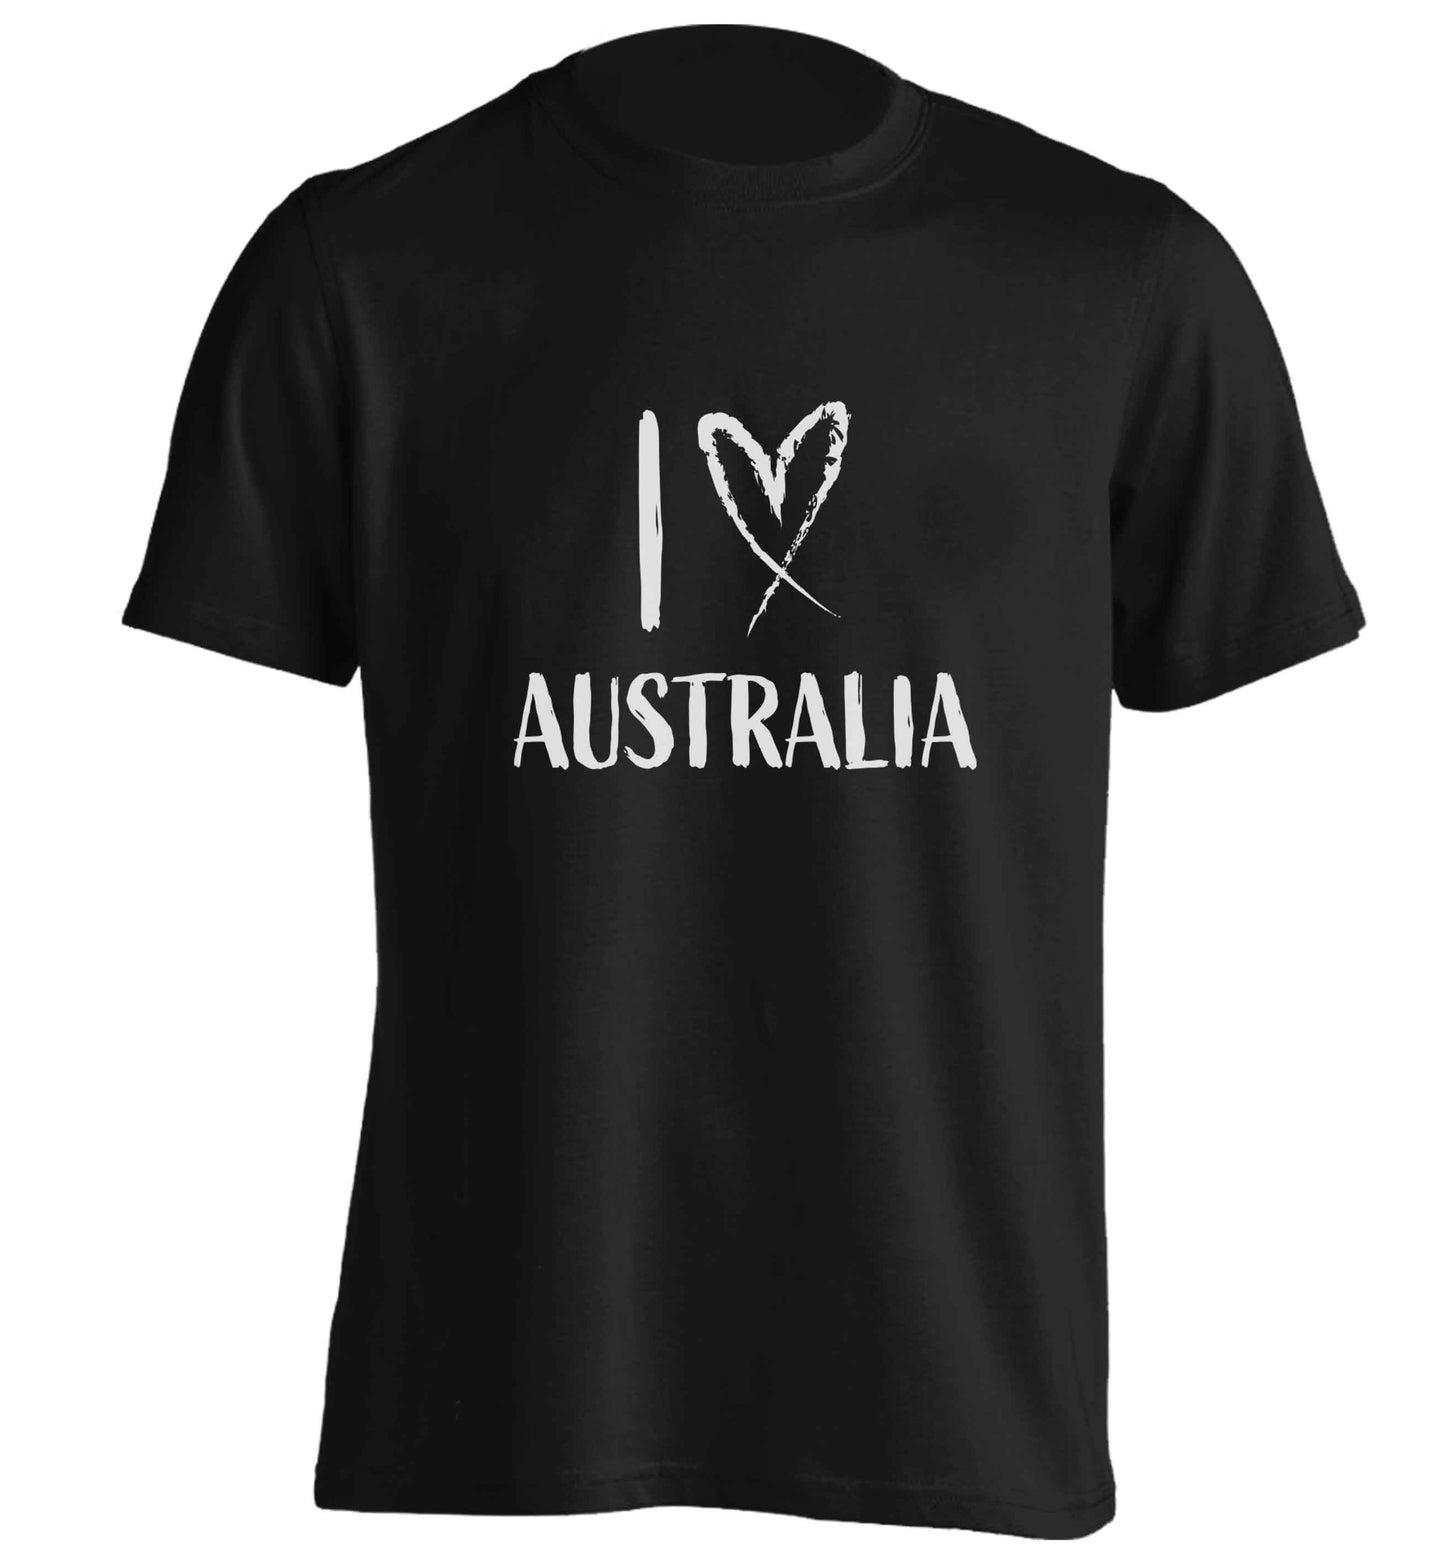 I Love Australia adults unisex black Tshirt 2XL